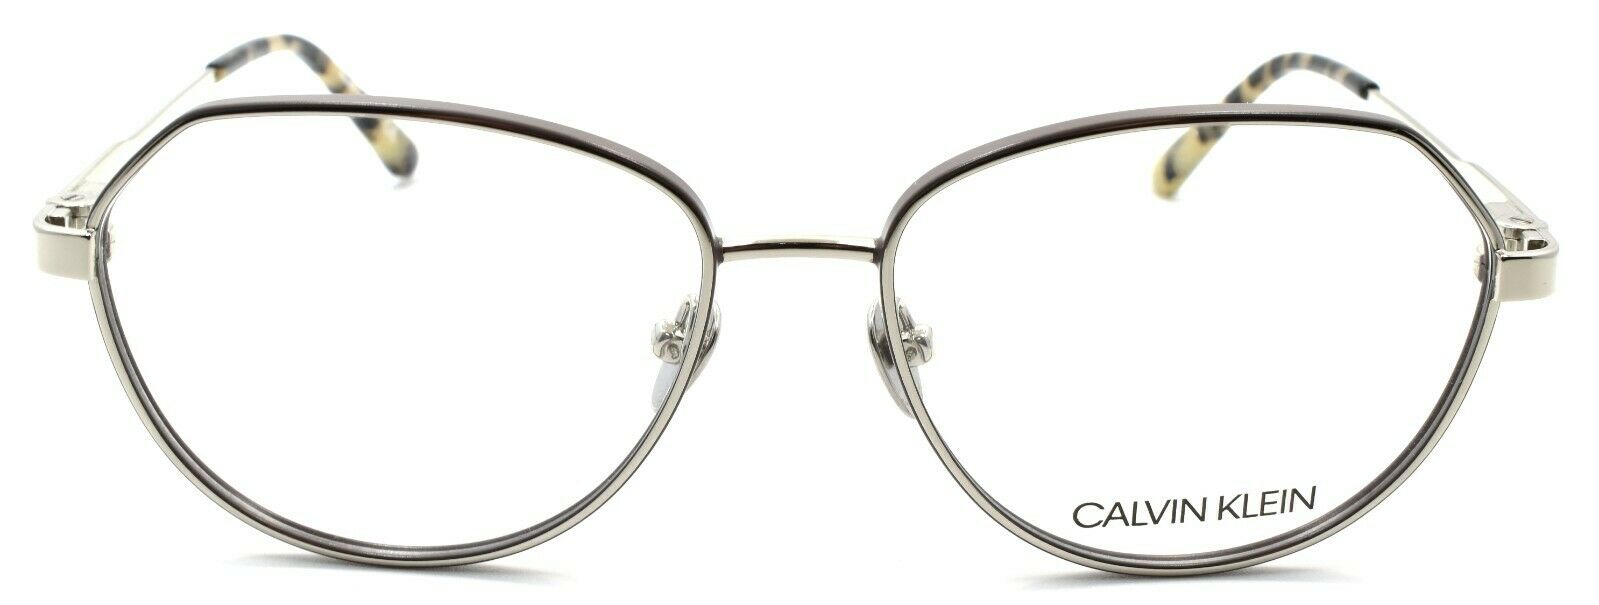 2-Calvin Klein CK19113 045 Women's Eyeglasses Frames 53-15-140 Silver-883901114416-IKSpecs